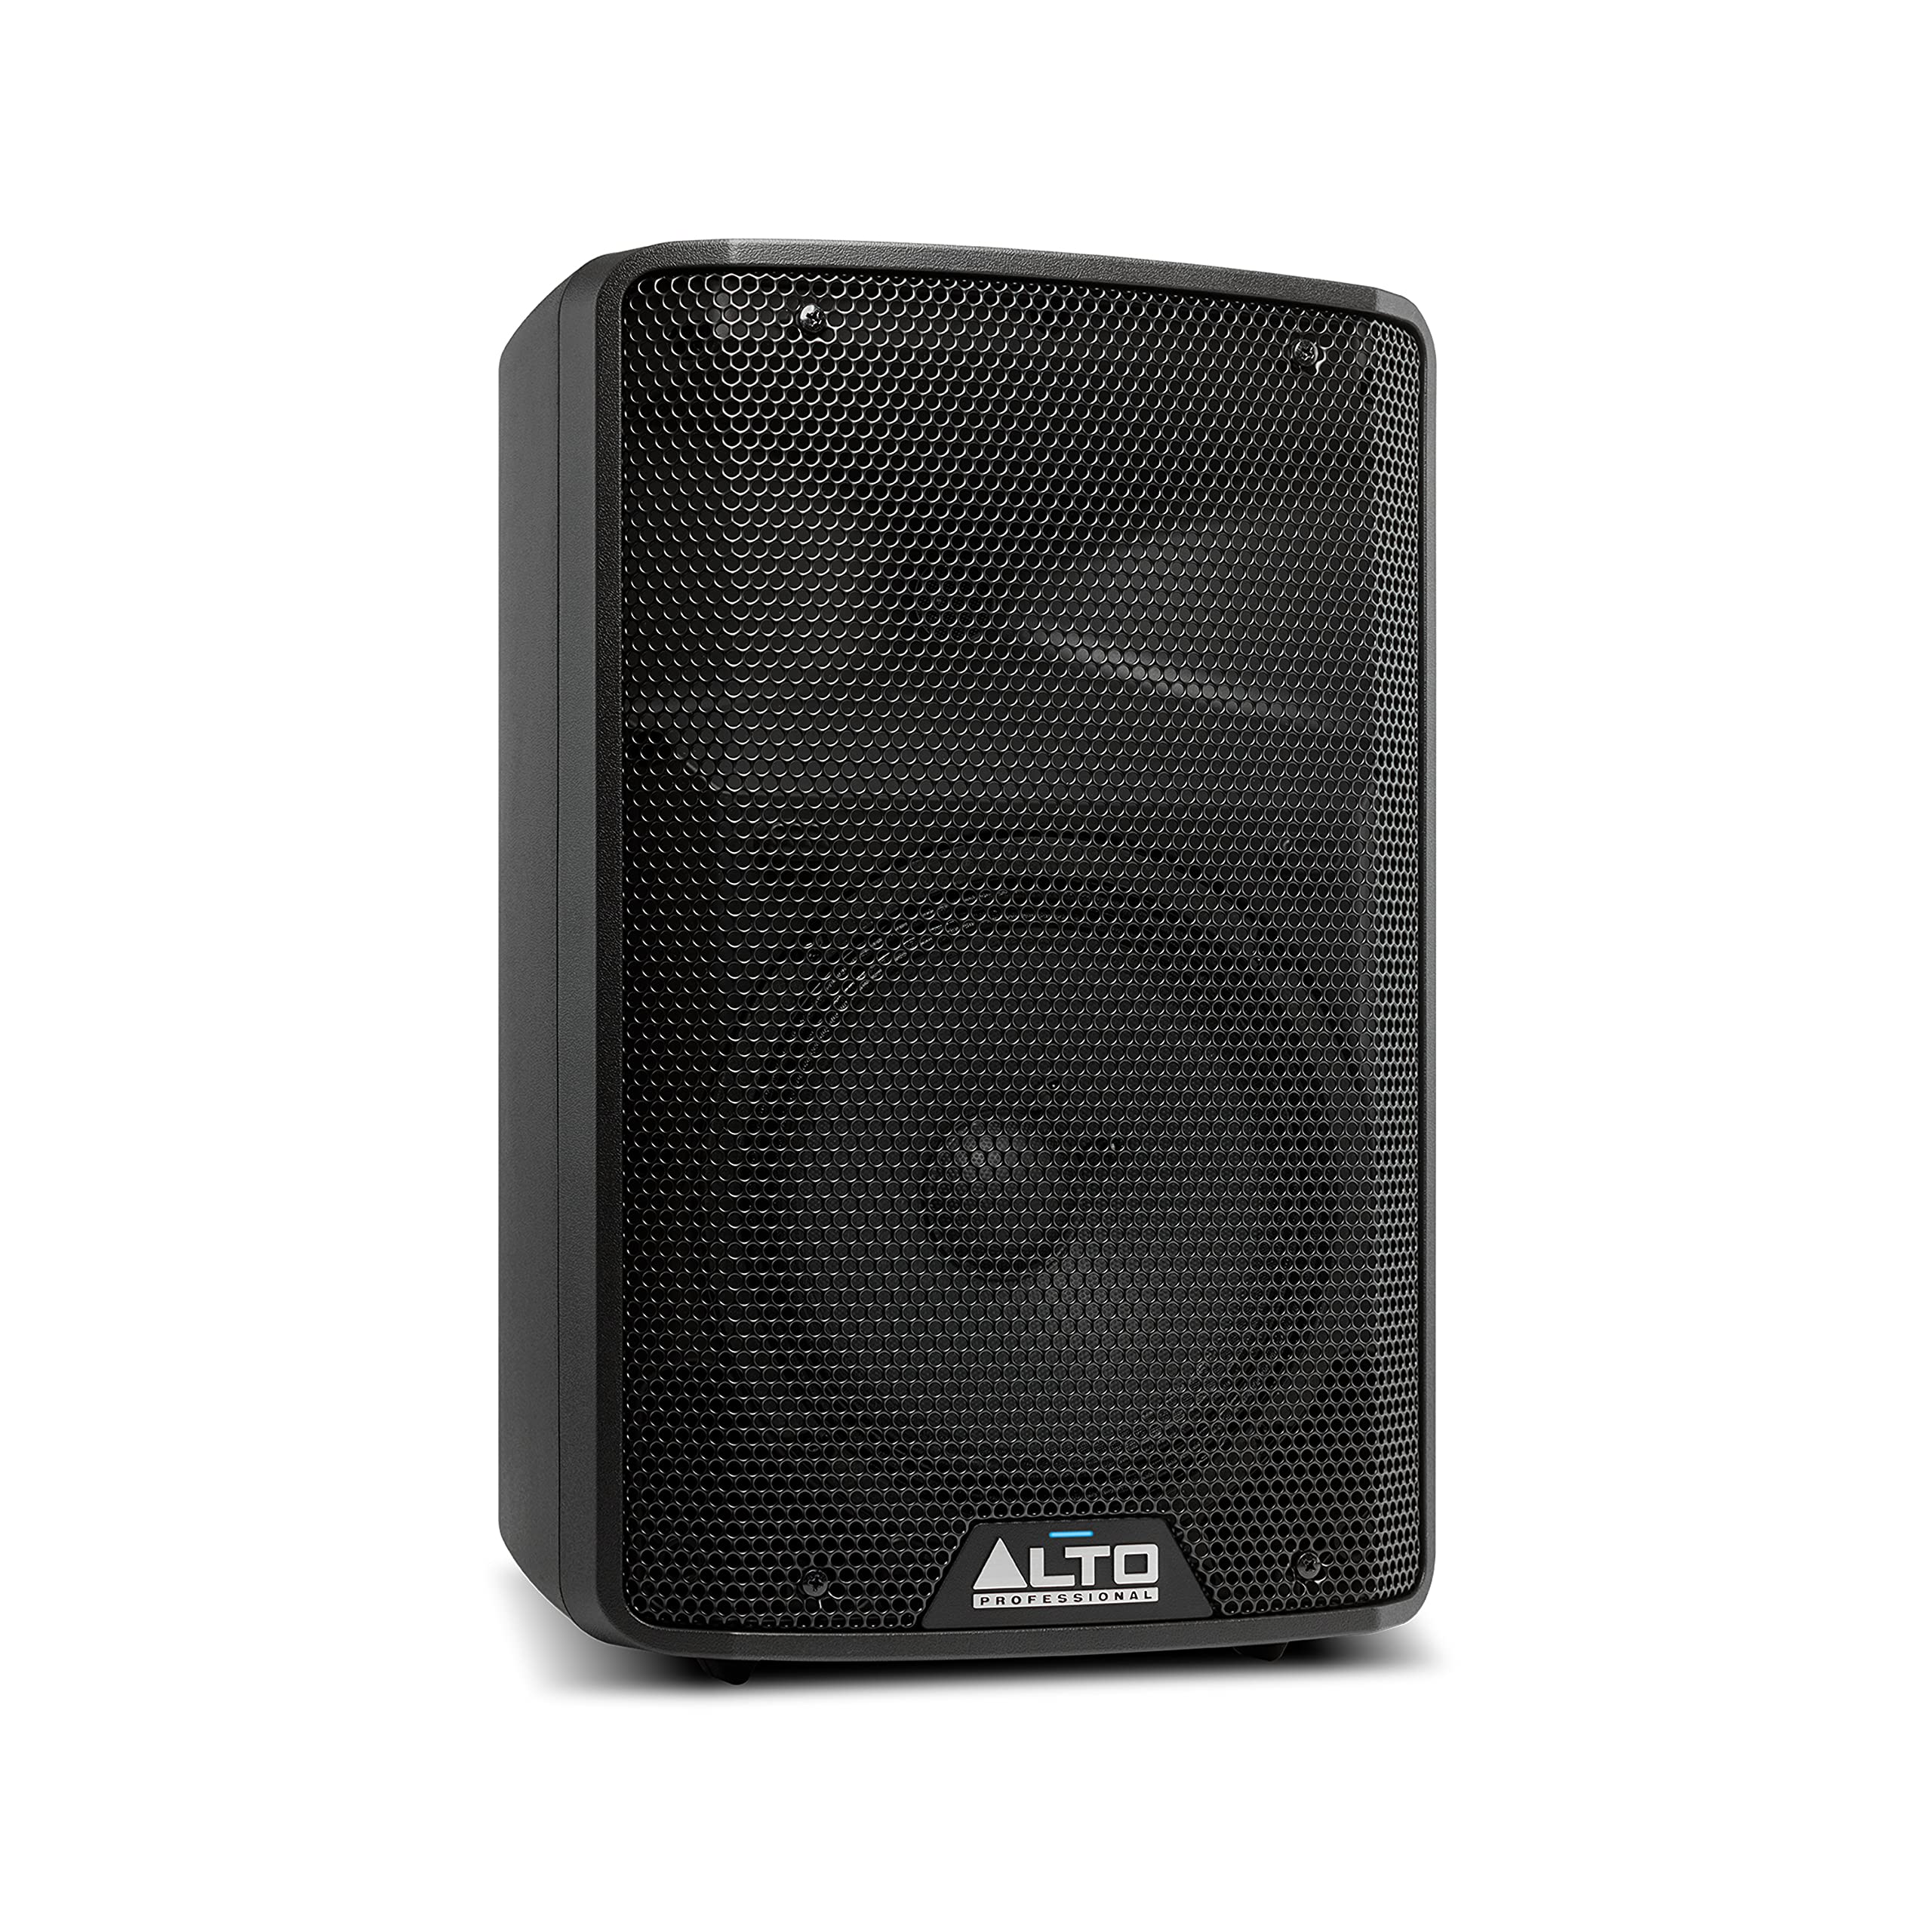 Alto Professional 带 8 英寸低音扬声器的 PA 扬声器，适用于移动 DJ 和音乐家、小型场地、仪式和体育赛事